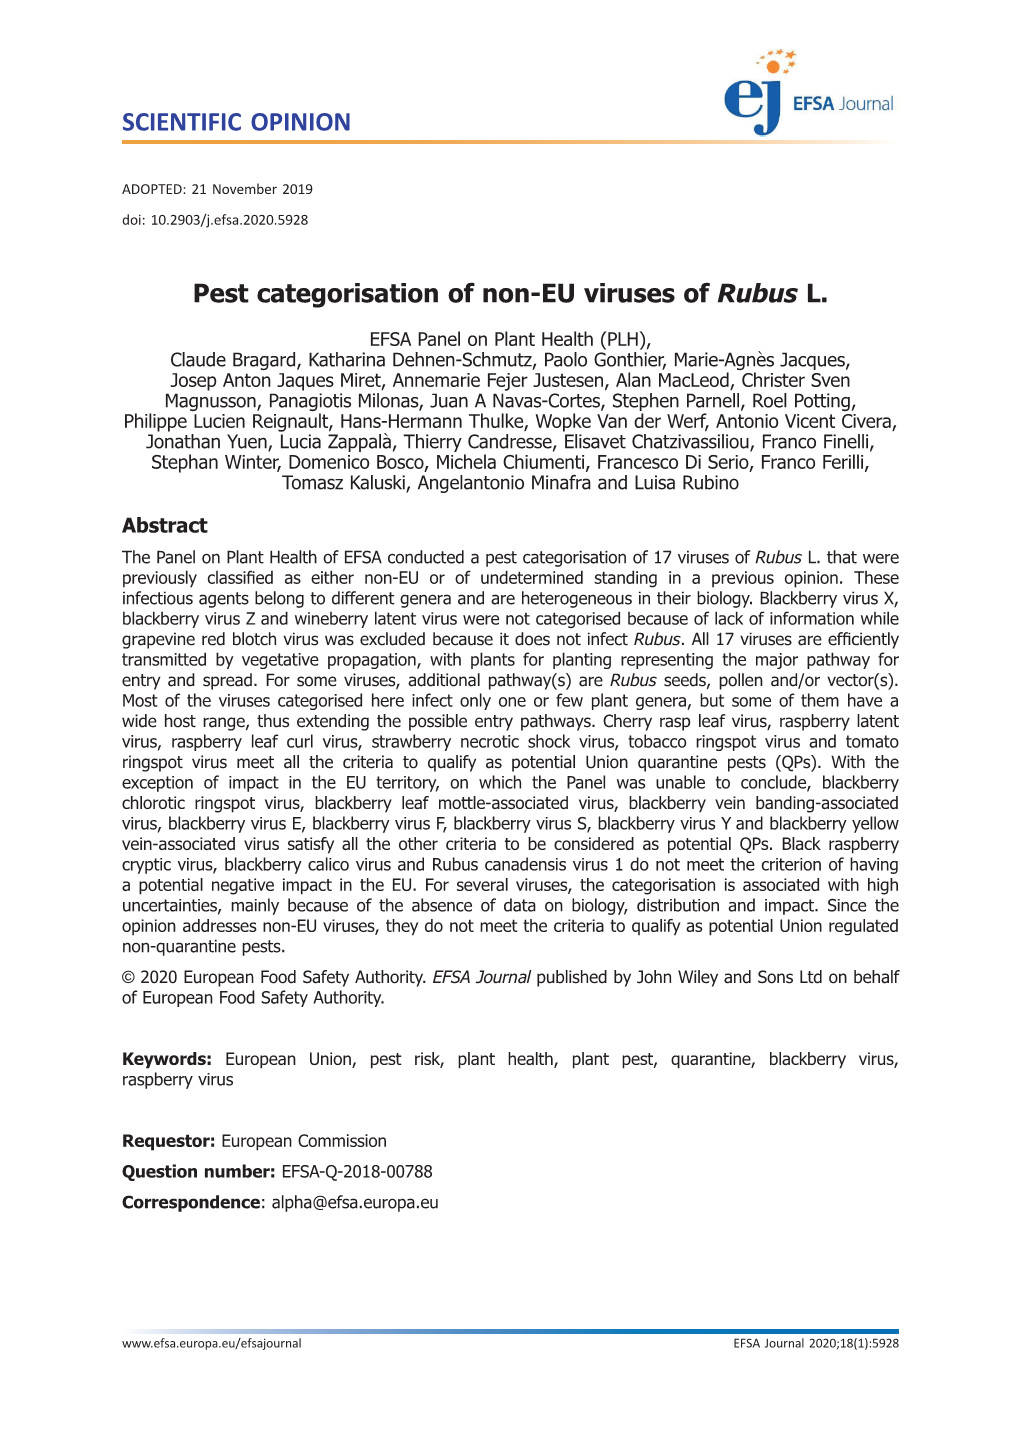 Pest Categorisation of Non-EU Viruses of Rubus L